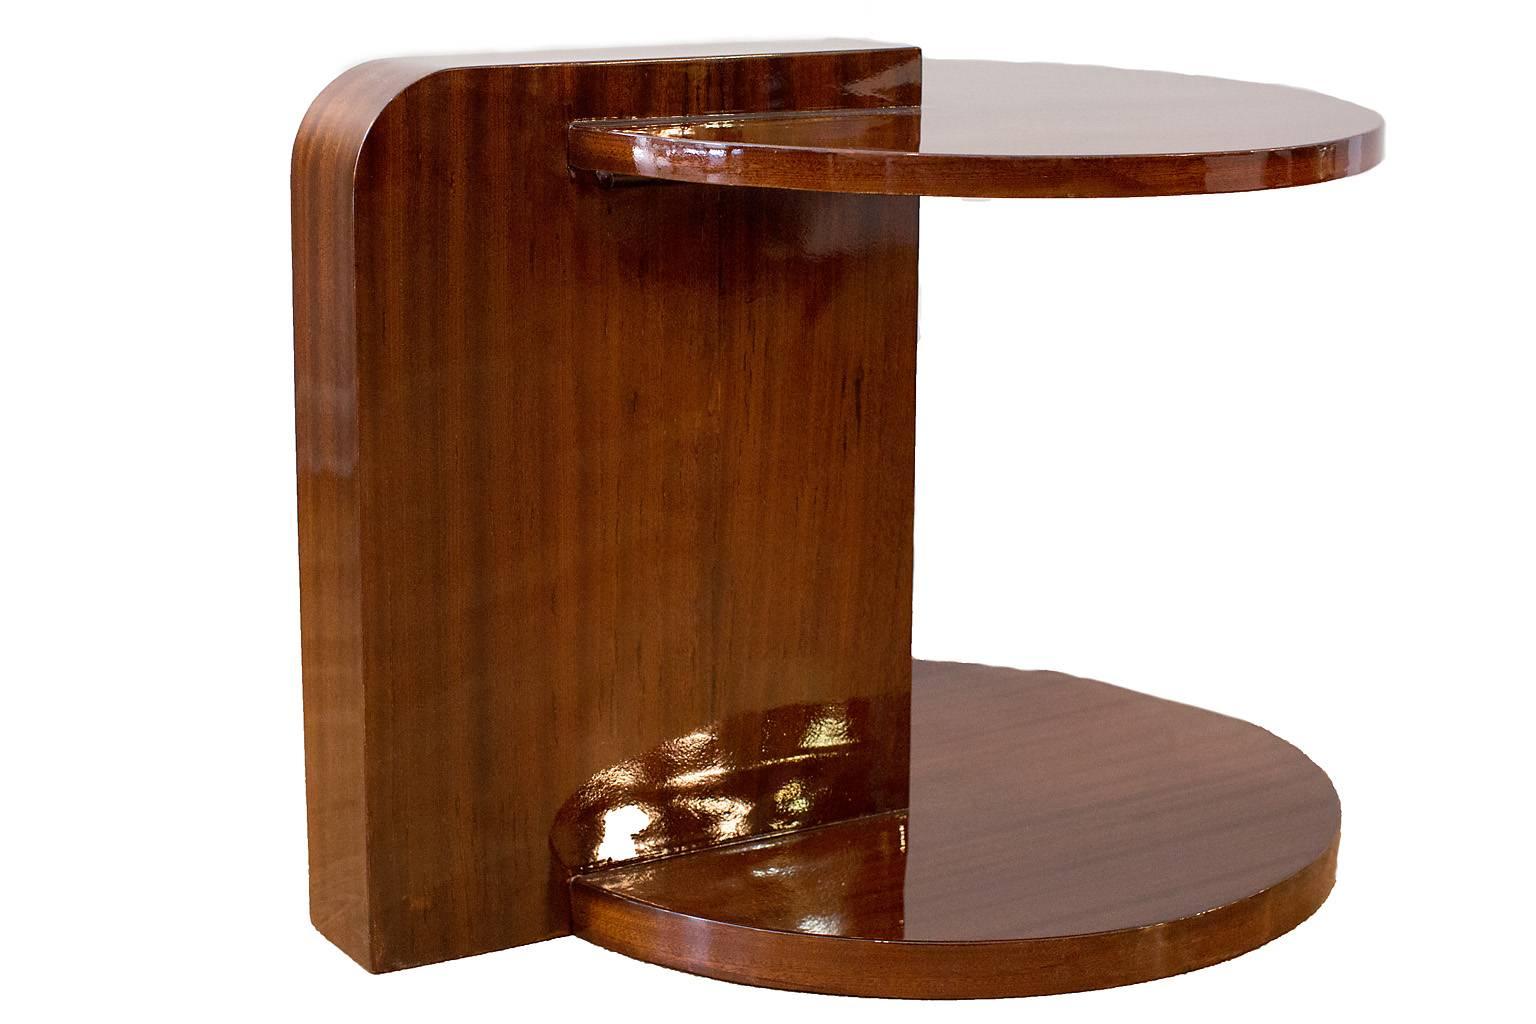 Art Deco side table, custom design in Rio palissandre.
         